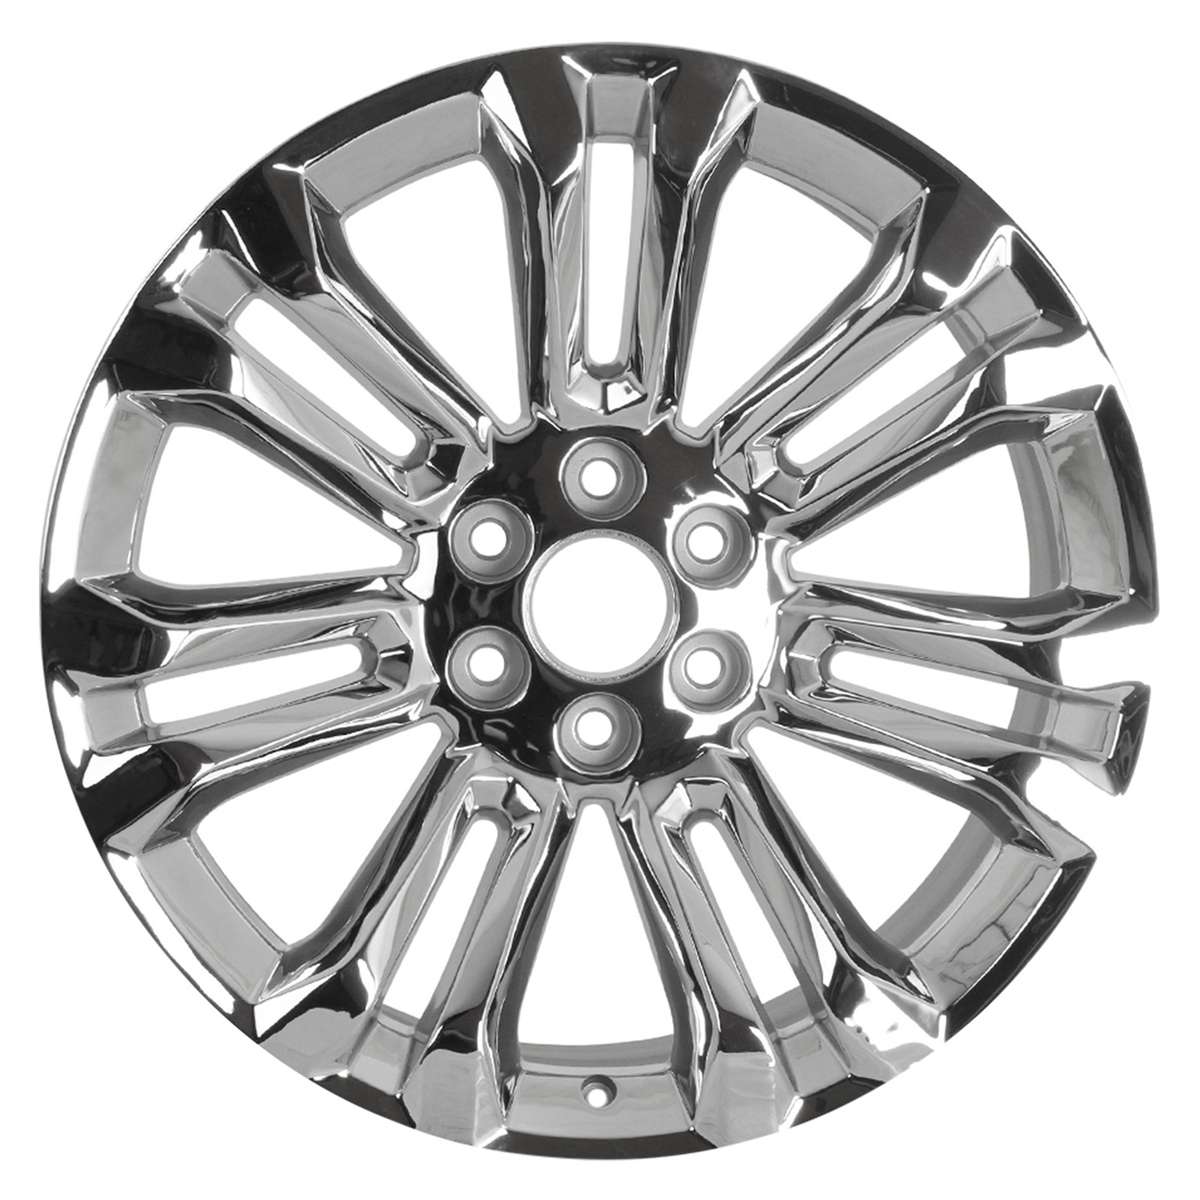 2014 Chevrolet Silverado 1500 New 22" Replacement Wheel Rim RW5666CHR